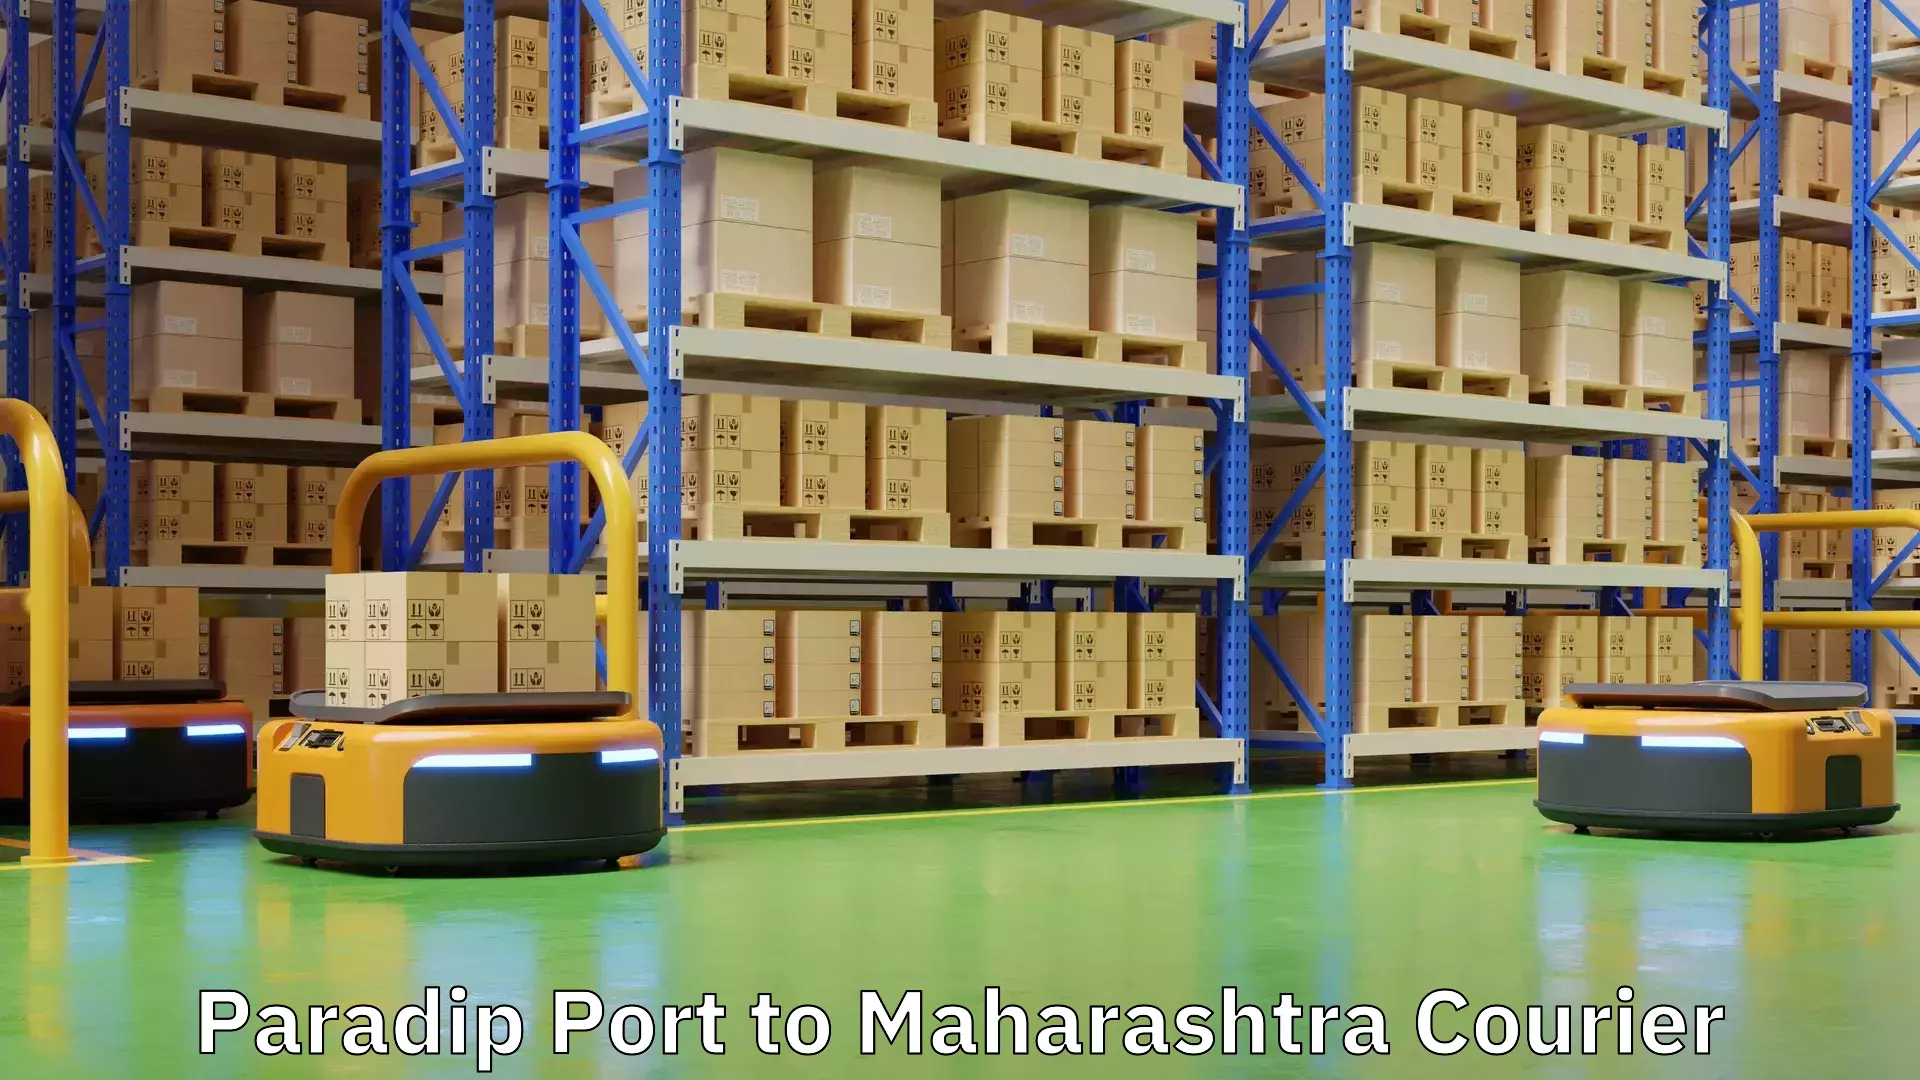 Courier service partnerships in Paradip Port to Maharashtra